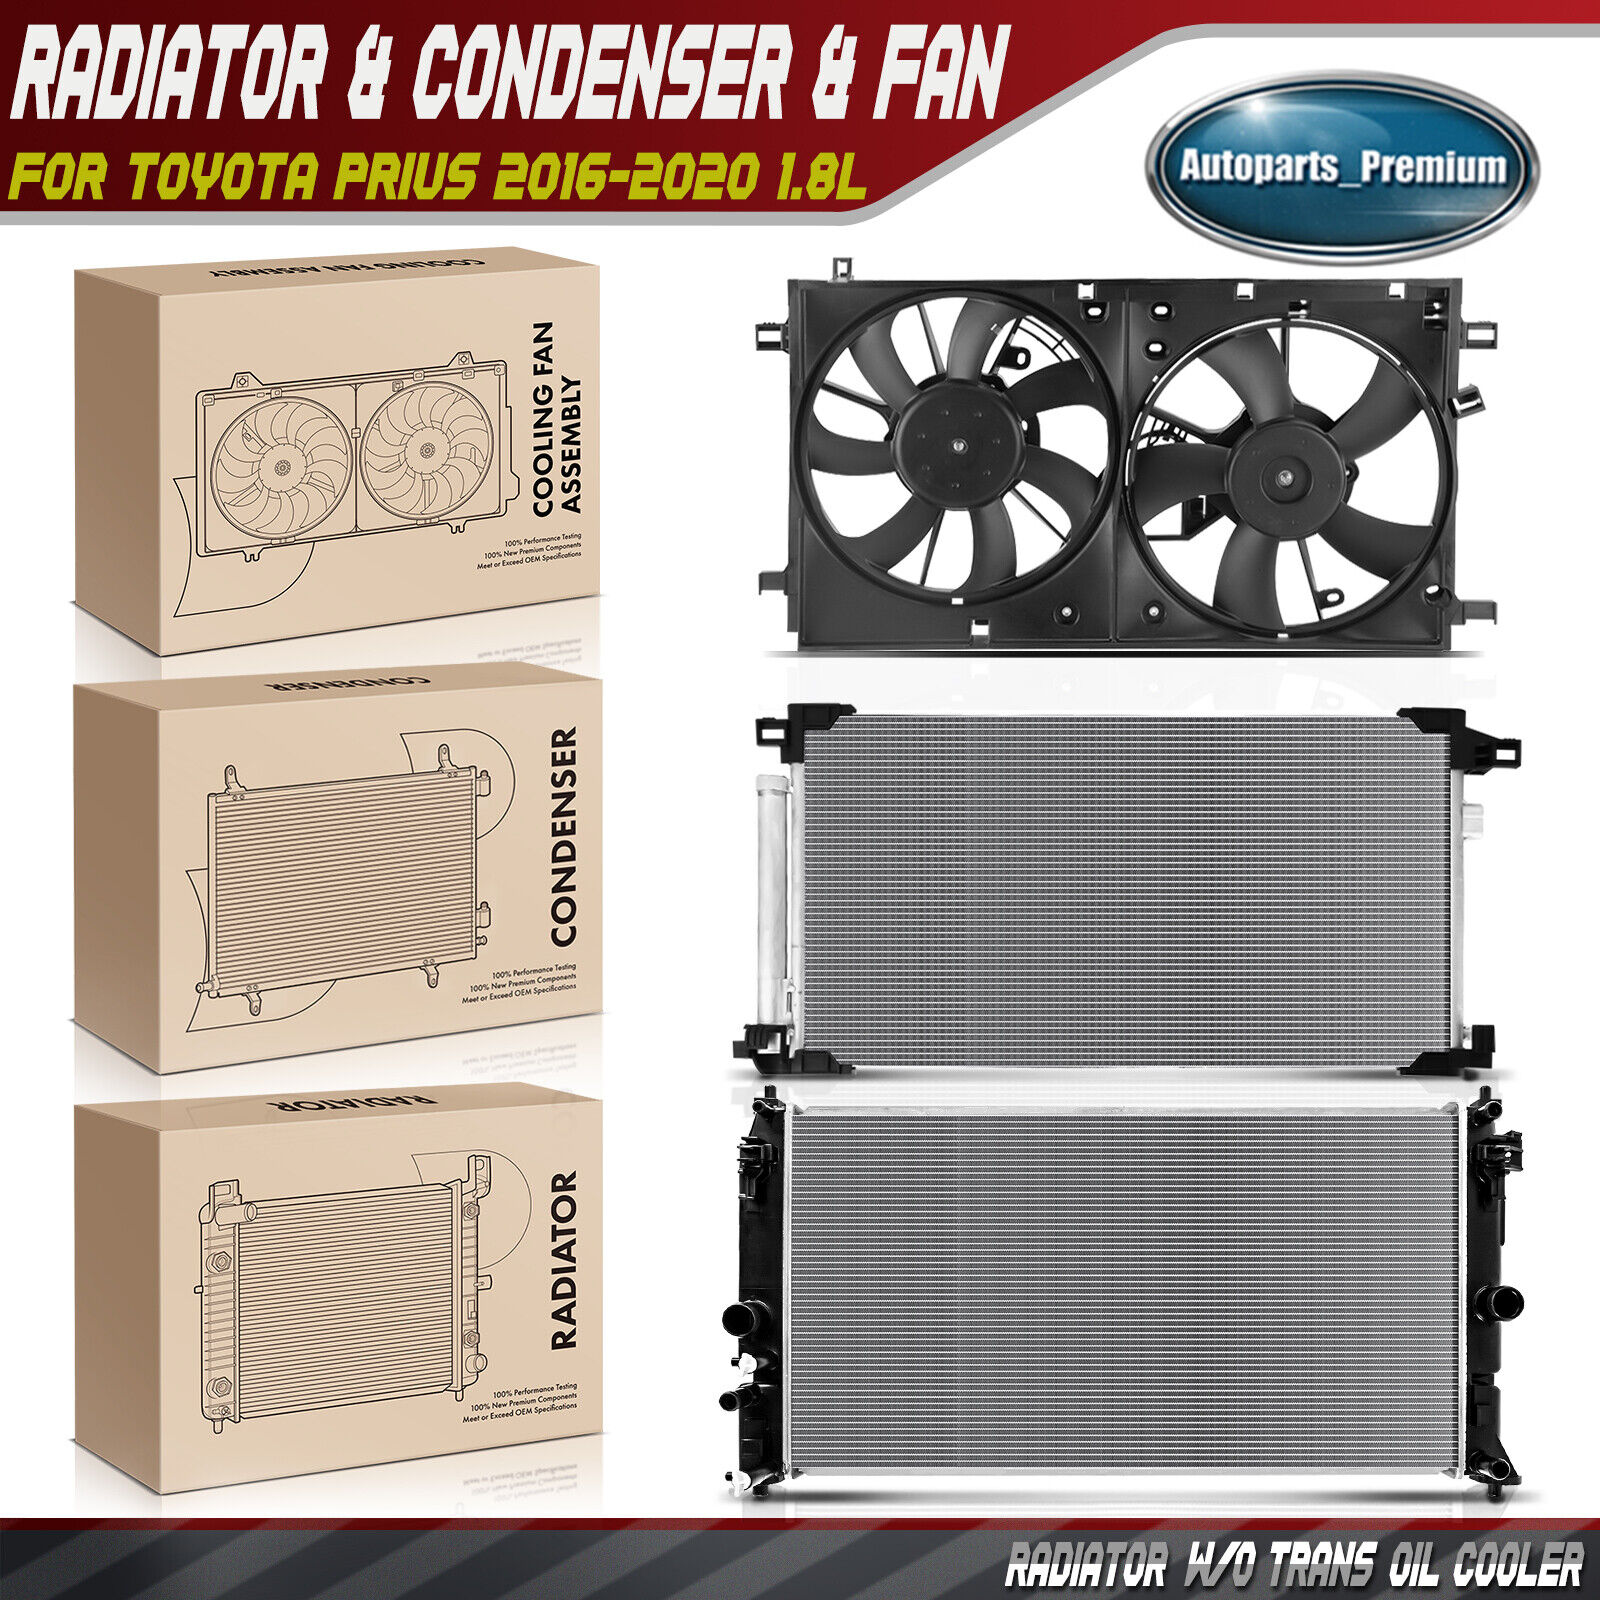 Radiator & AC Condenser & Dual Cooling Fan Kit for Toyota Prius 2016-2020 1.8L